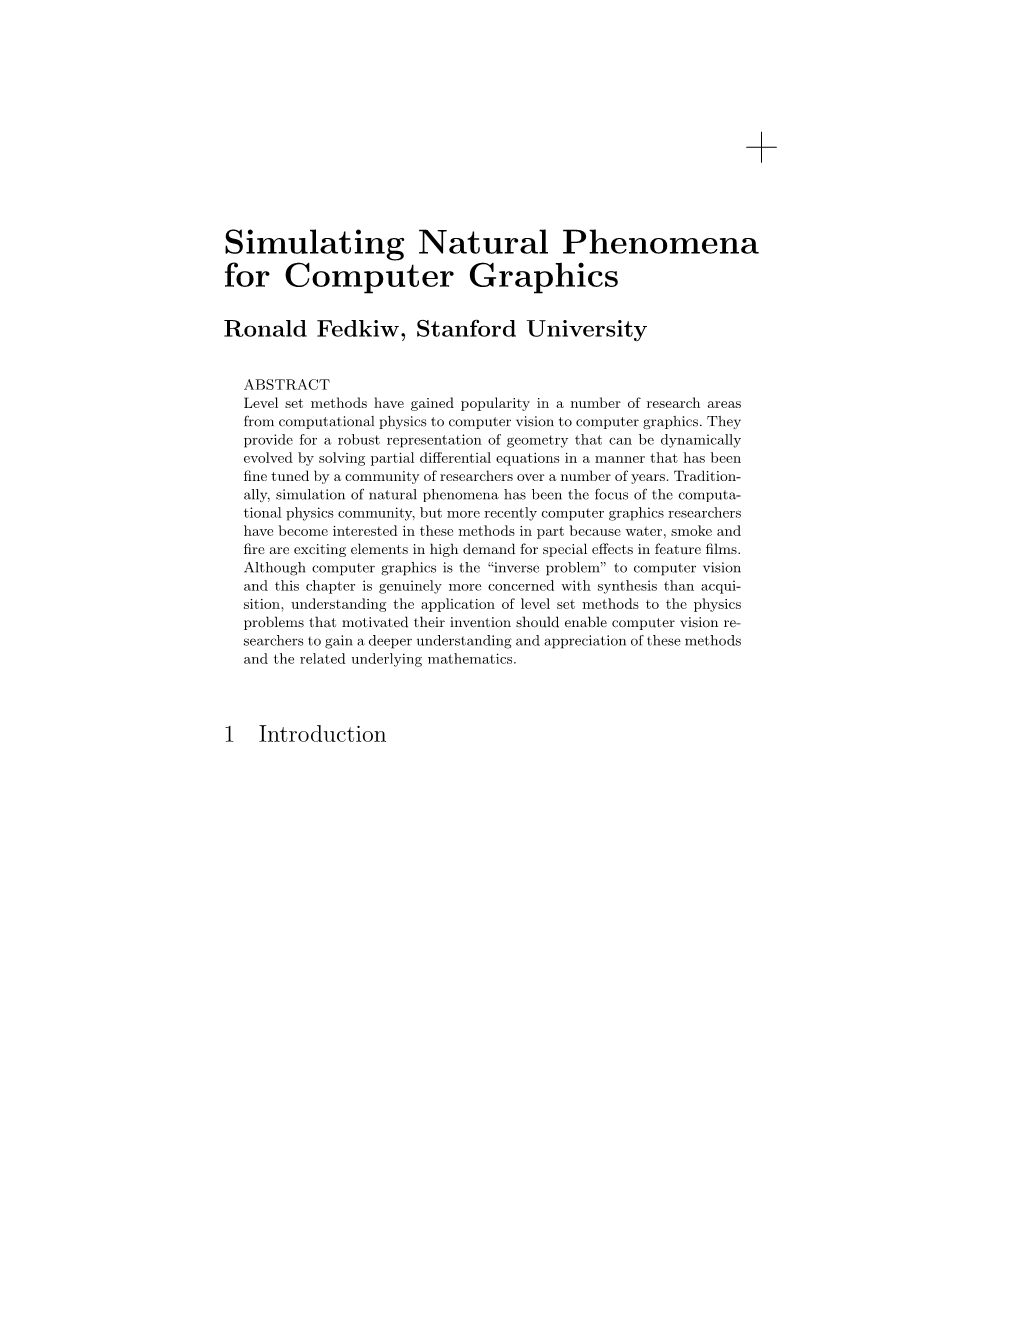 Simulating Natural Phenomena for Computer Graphics Ronald Fedkiw, Stanford University